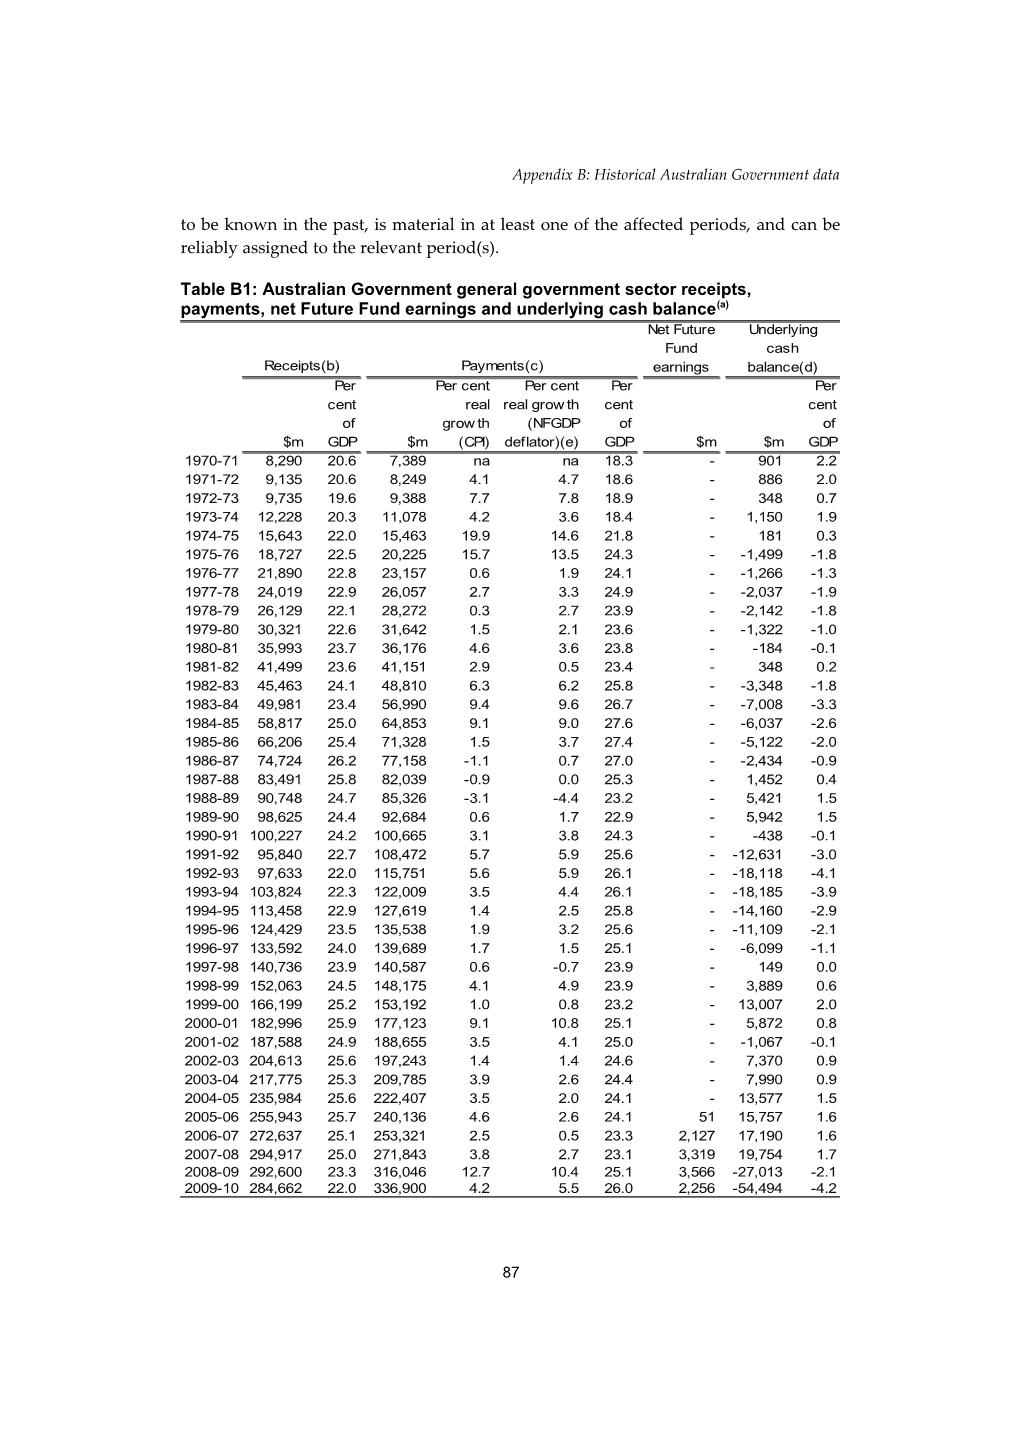 2015-16 Final Budget Outcome - Appendix B: Historical Australian Government Data